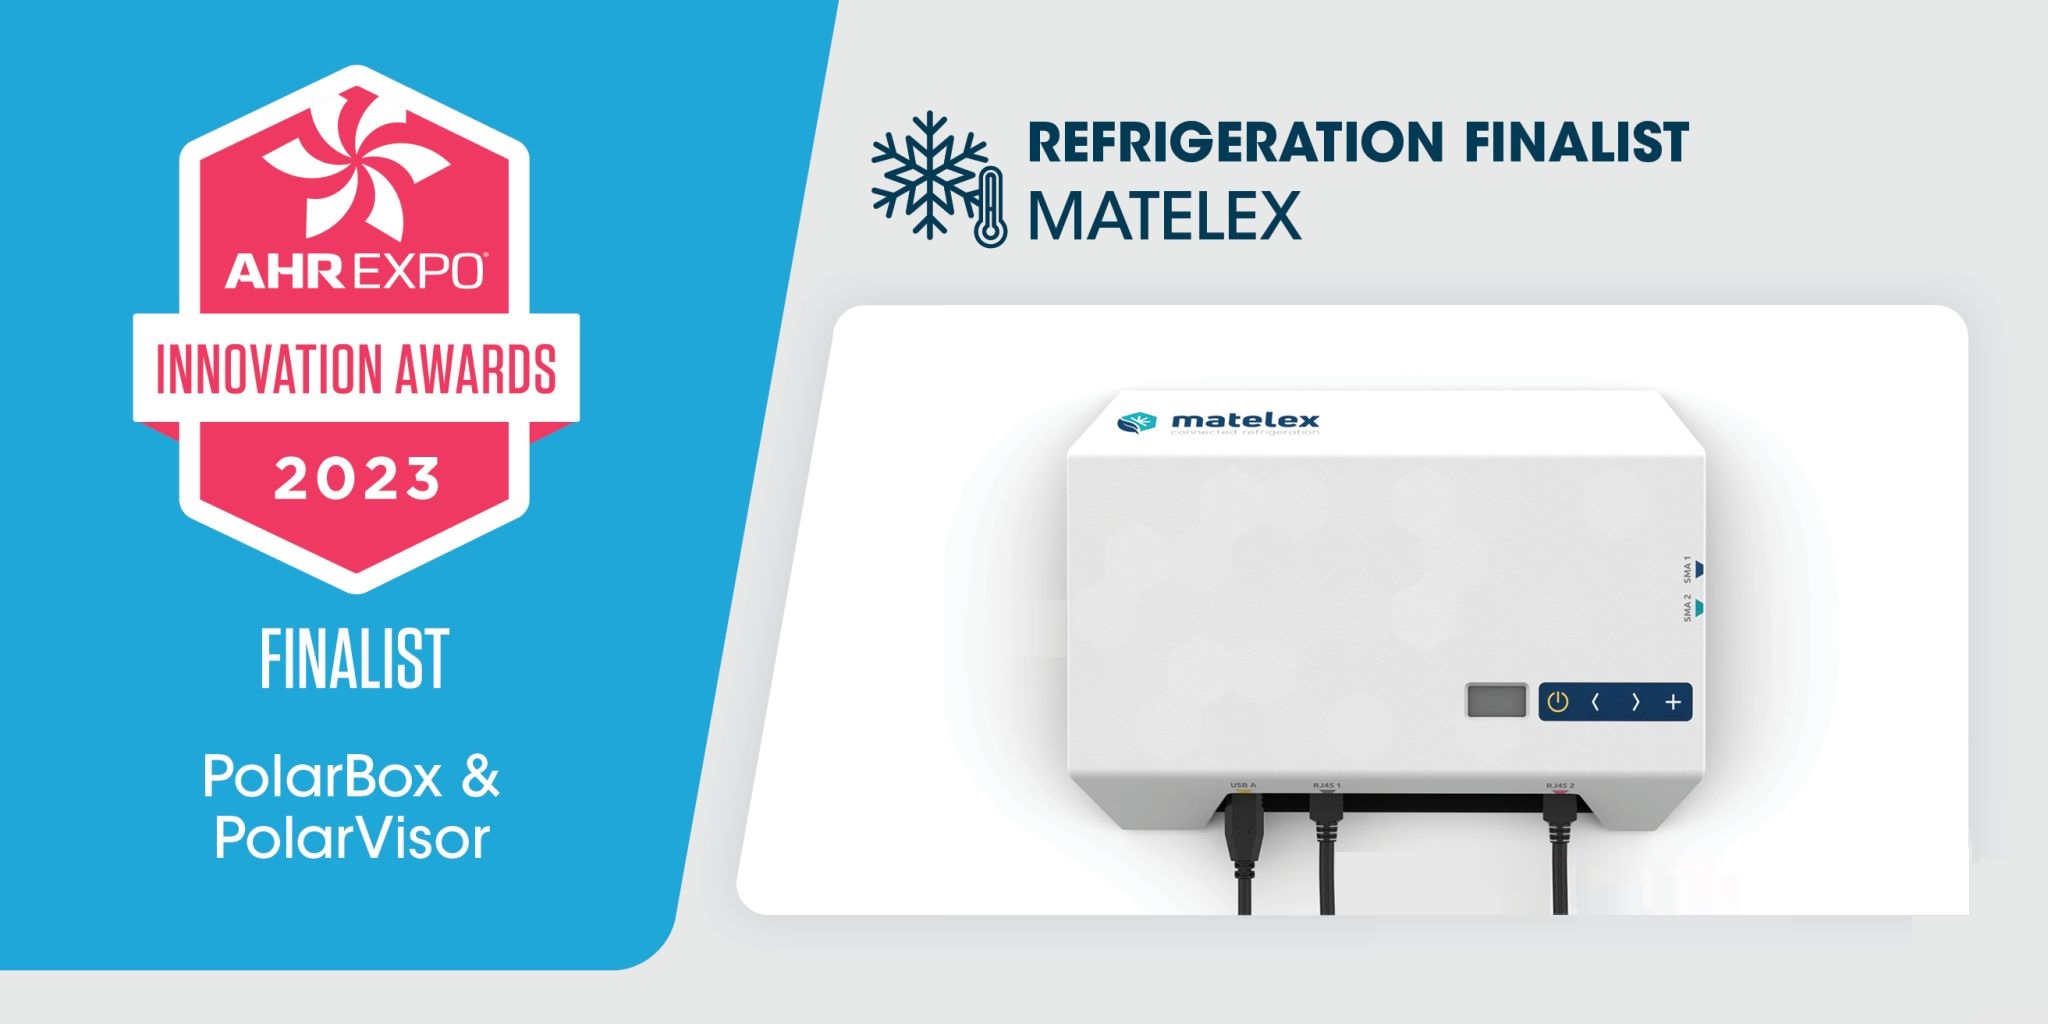 PolarBox & PolarVisor - Matelex's proactive refrigeration maintenance 